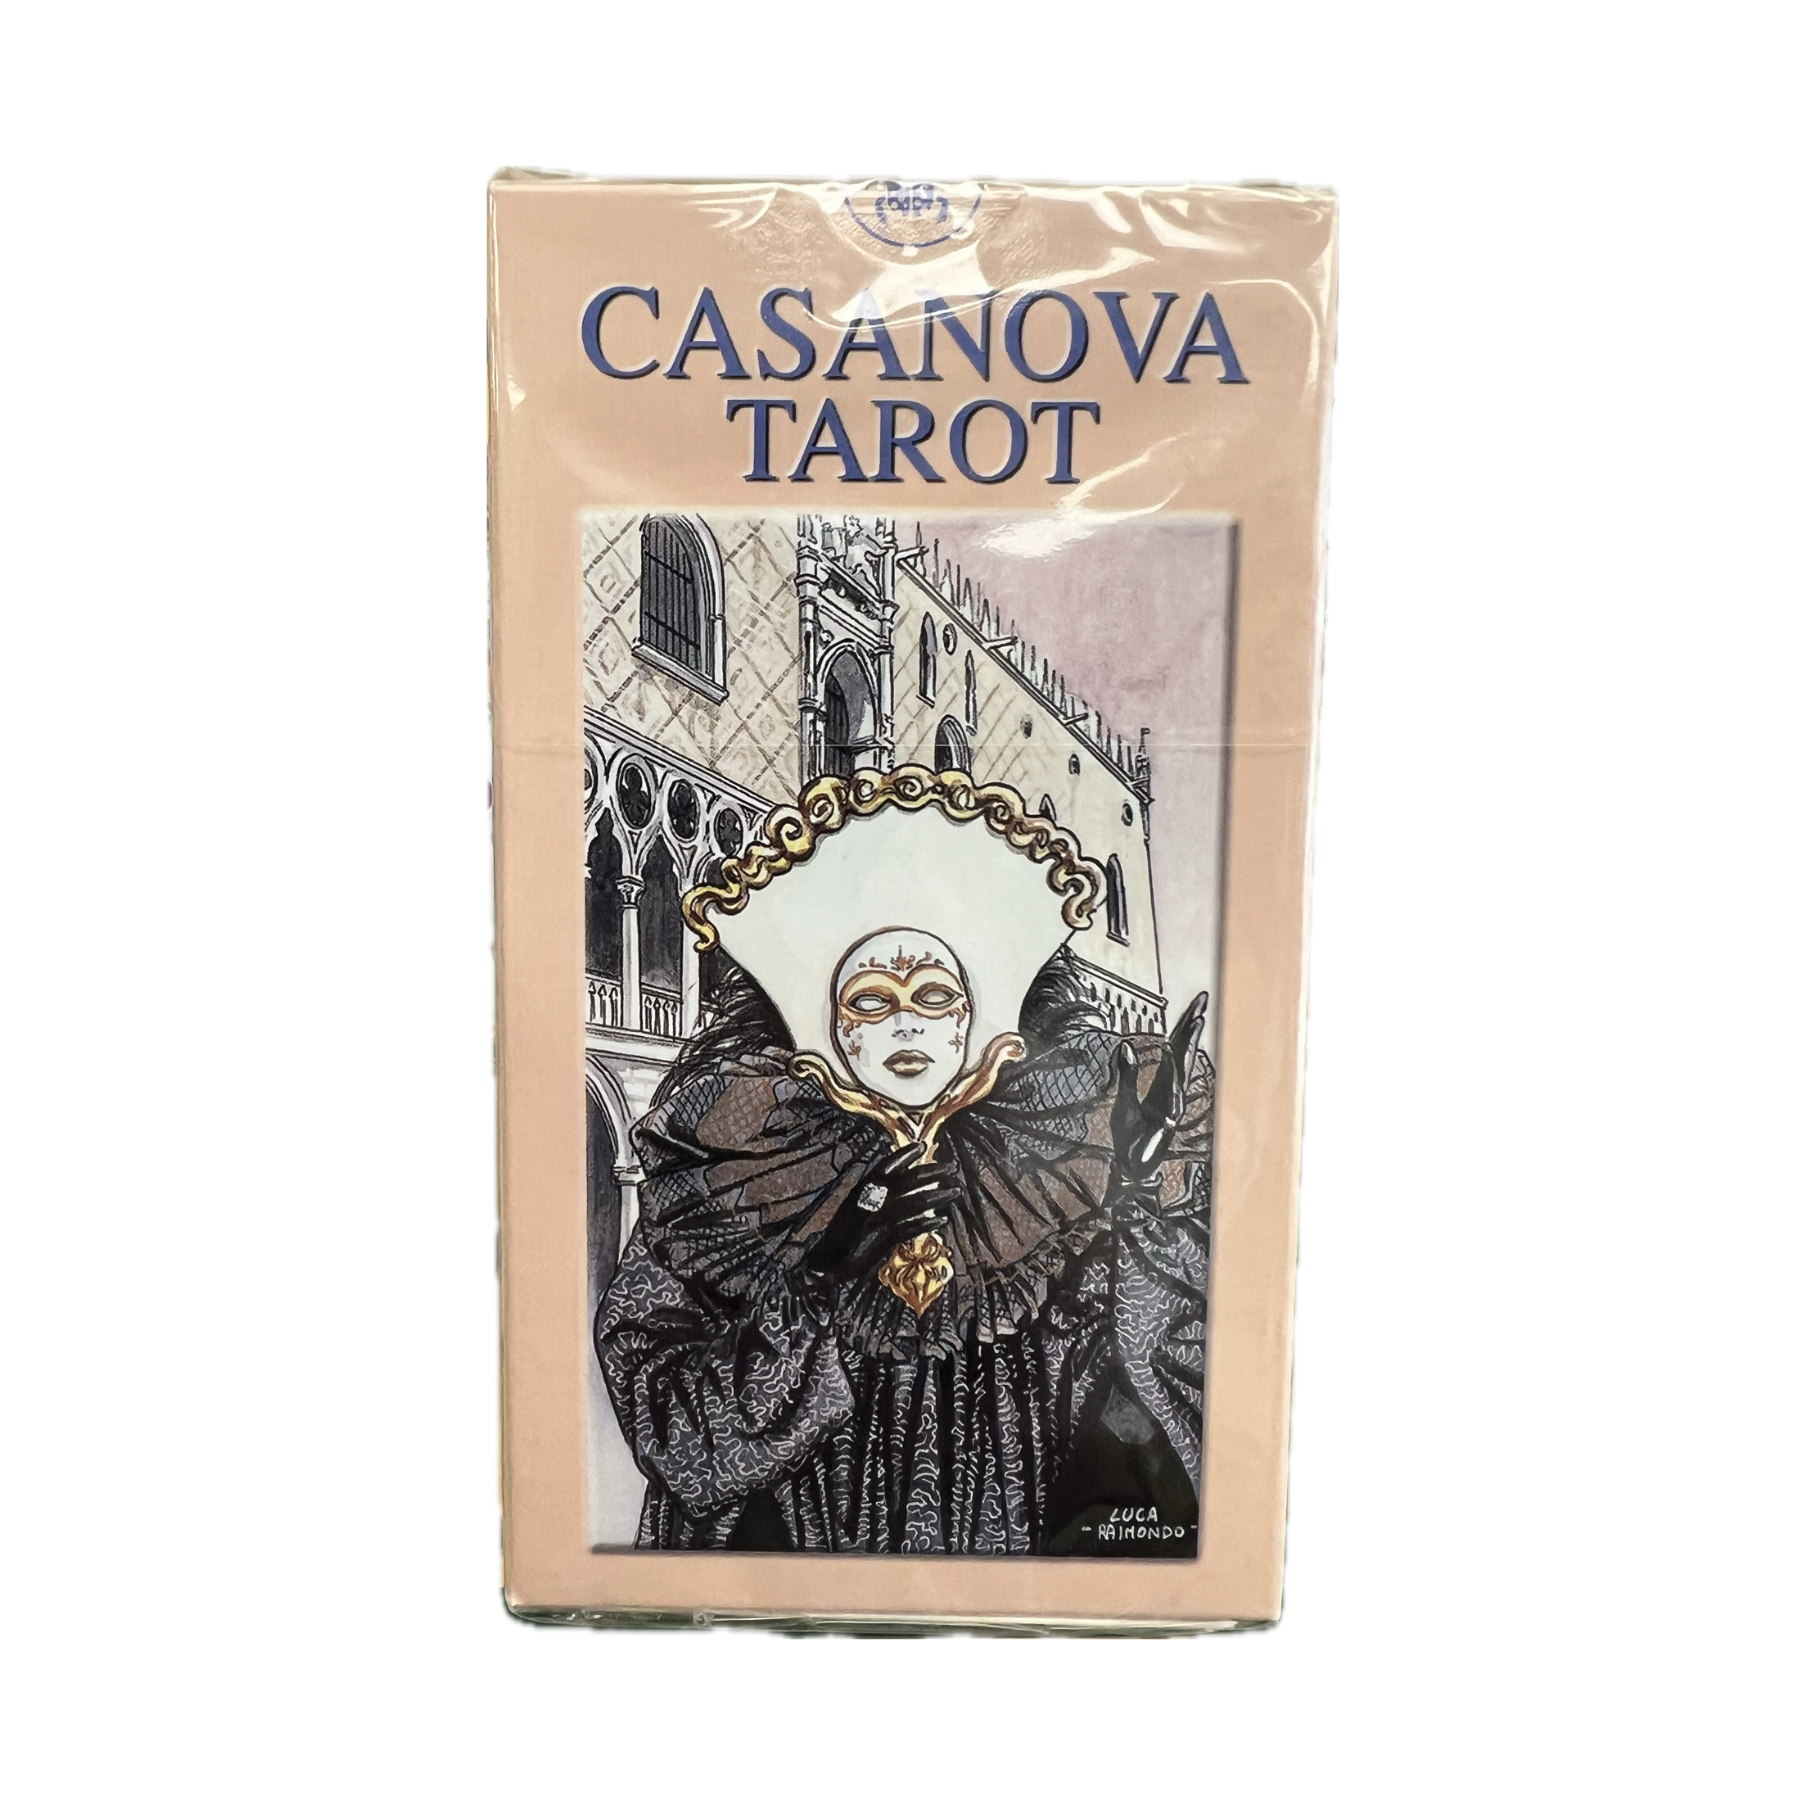 Casanova Tarot Deck front cover